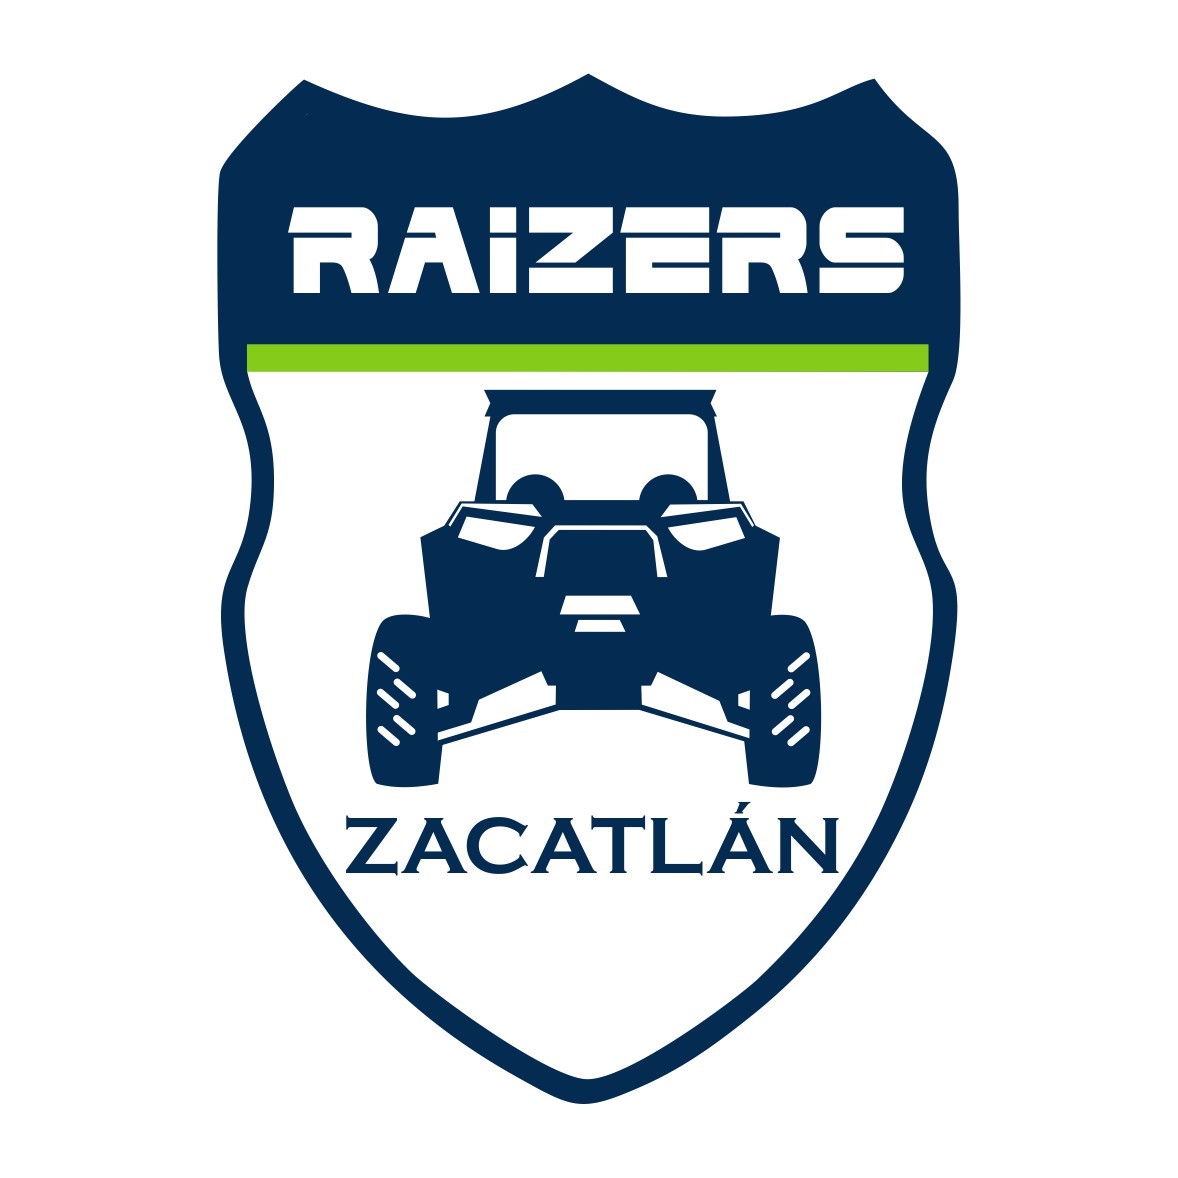 Raizers Zacatlán